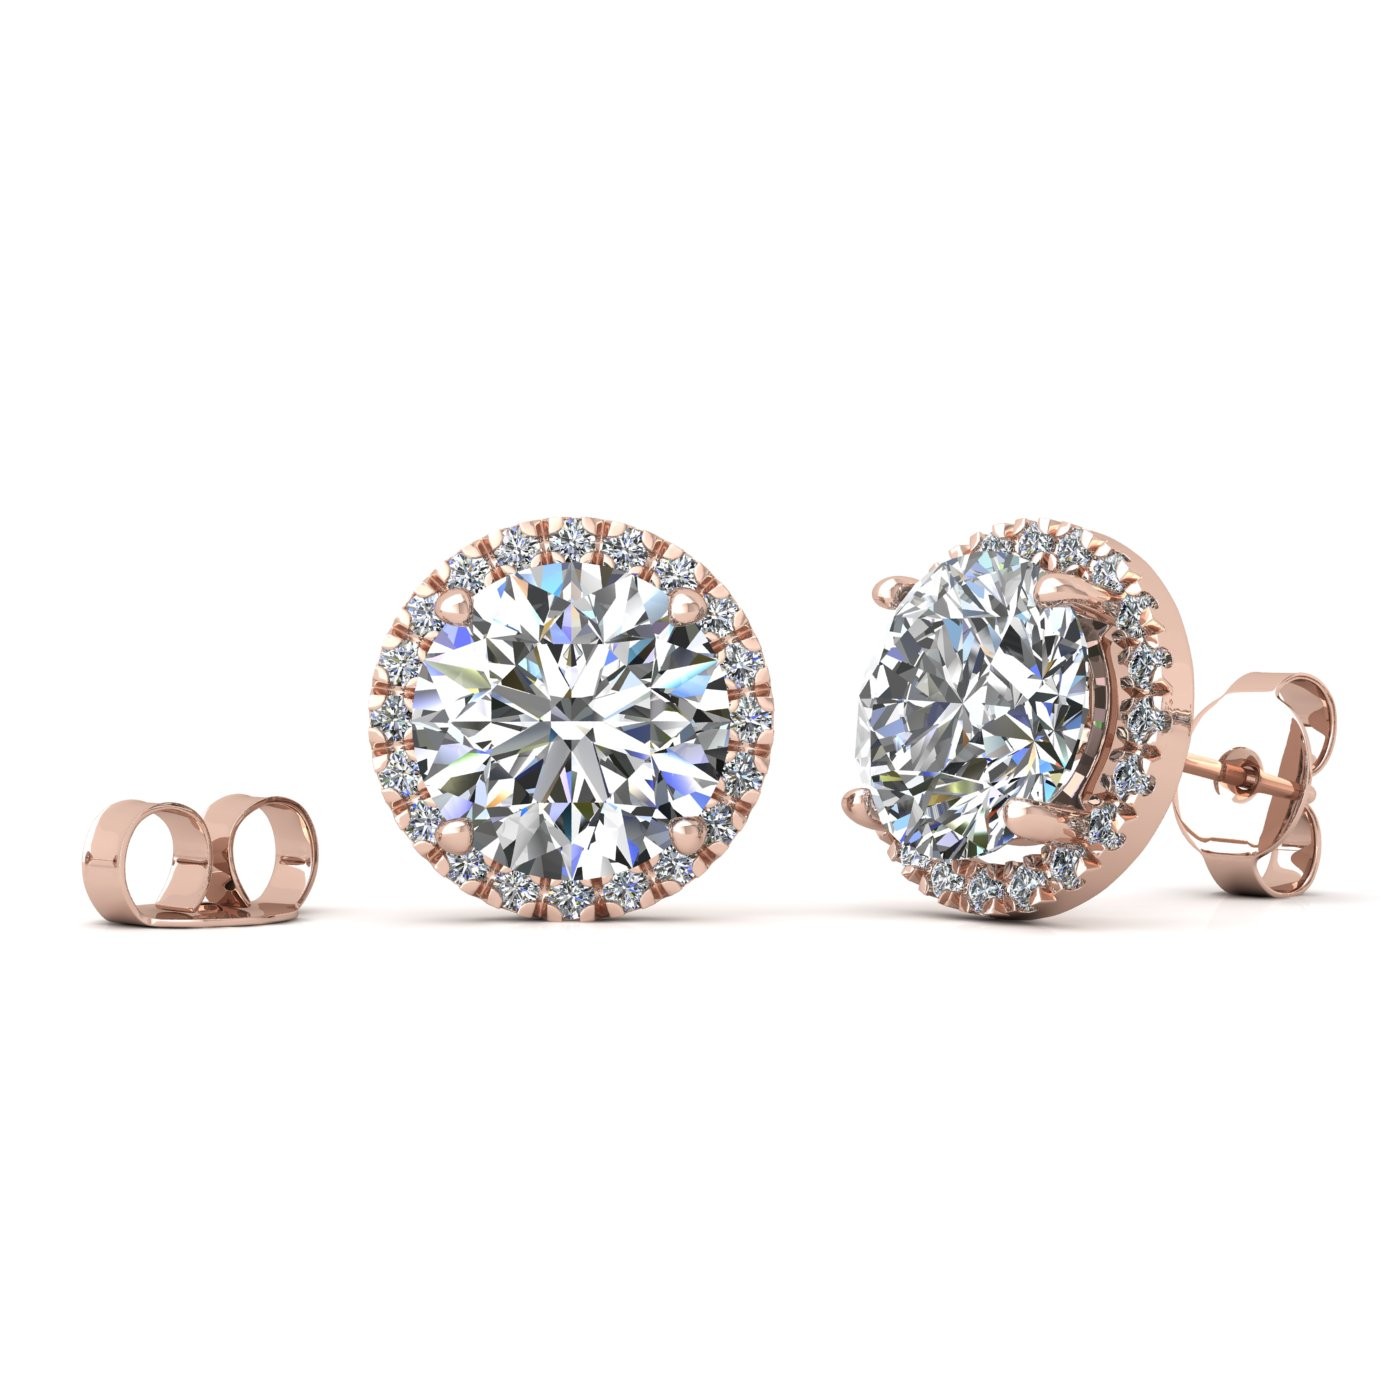 18k rose gold 1,5 ct each (3,0 tcw) 4 prongs round shape diamond earrings with diamond pavÉ set halo Photos & images